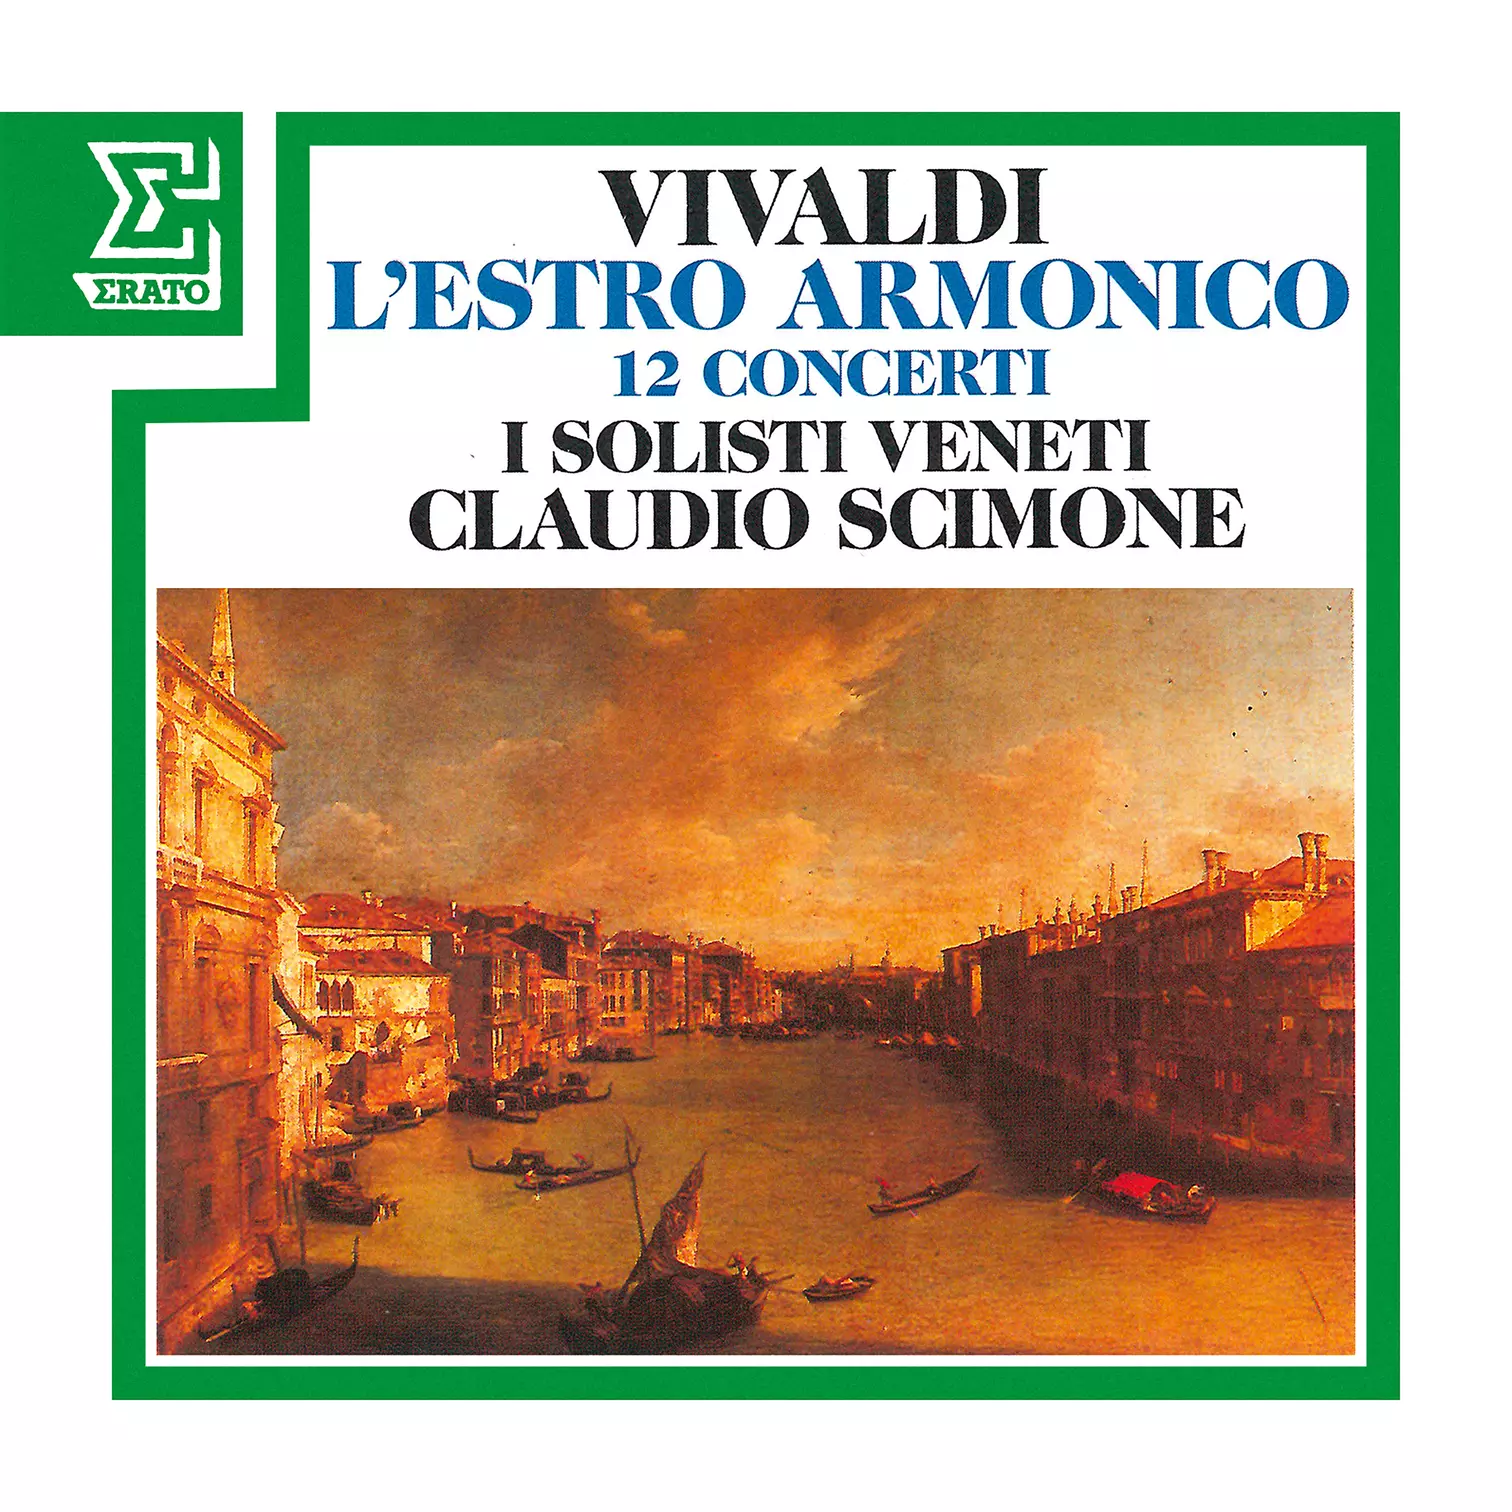 Vivaldi: L’estro armonico Claudio Scimone, I Solisti Veneti